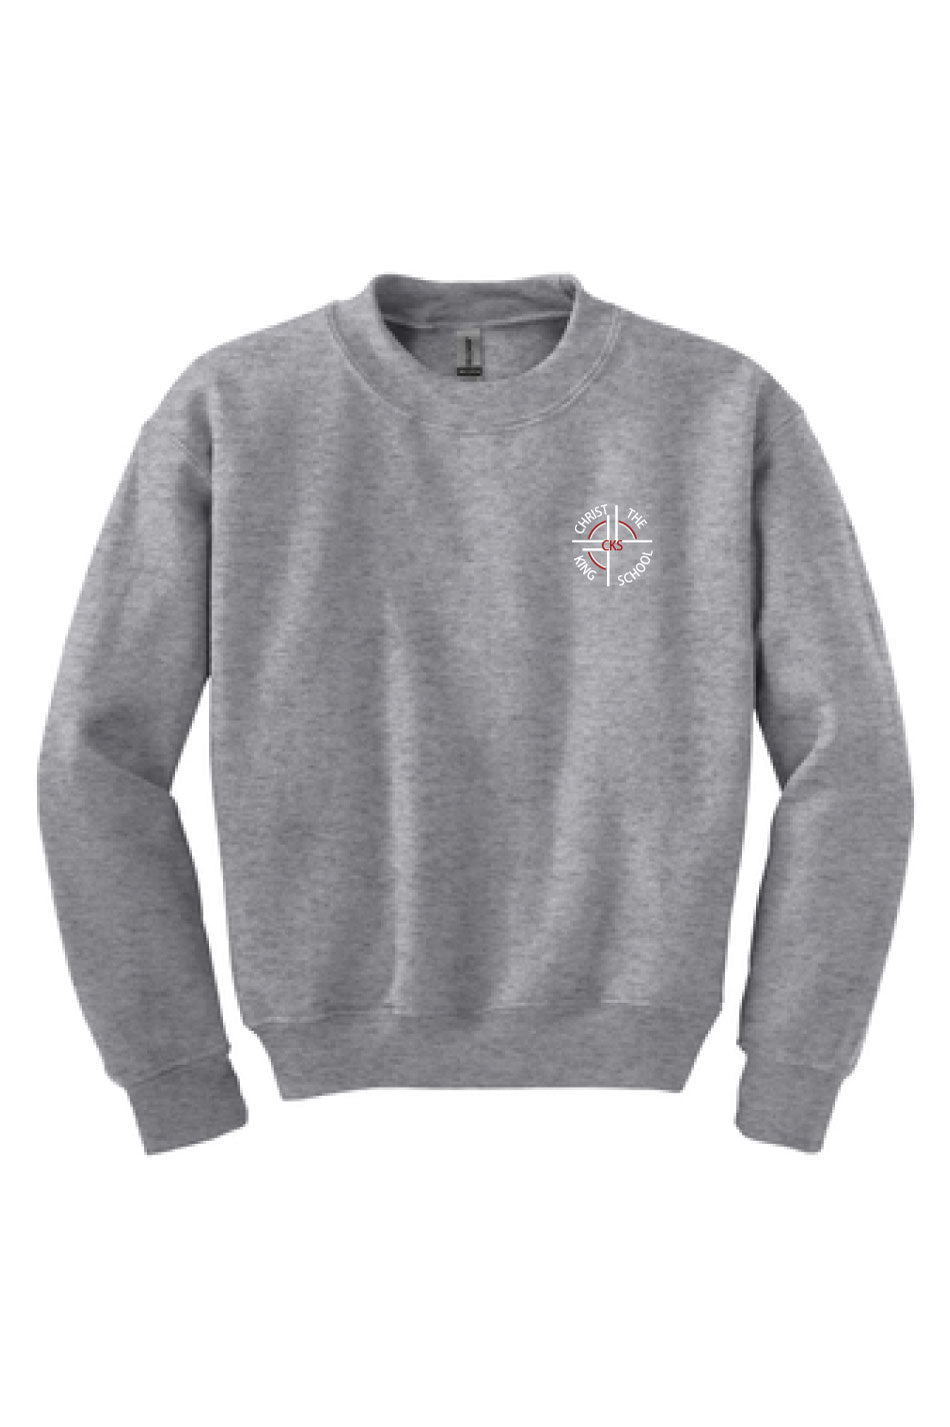 YOUTH CKS Crewneck Sweatshirt - Grey